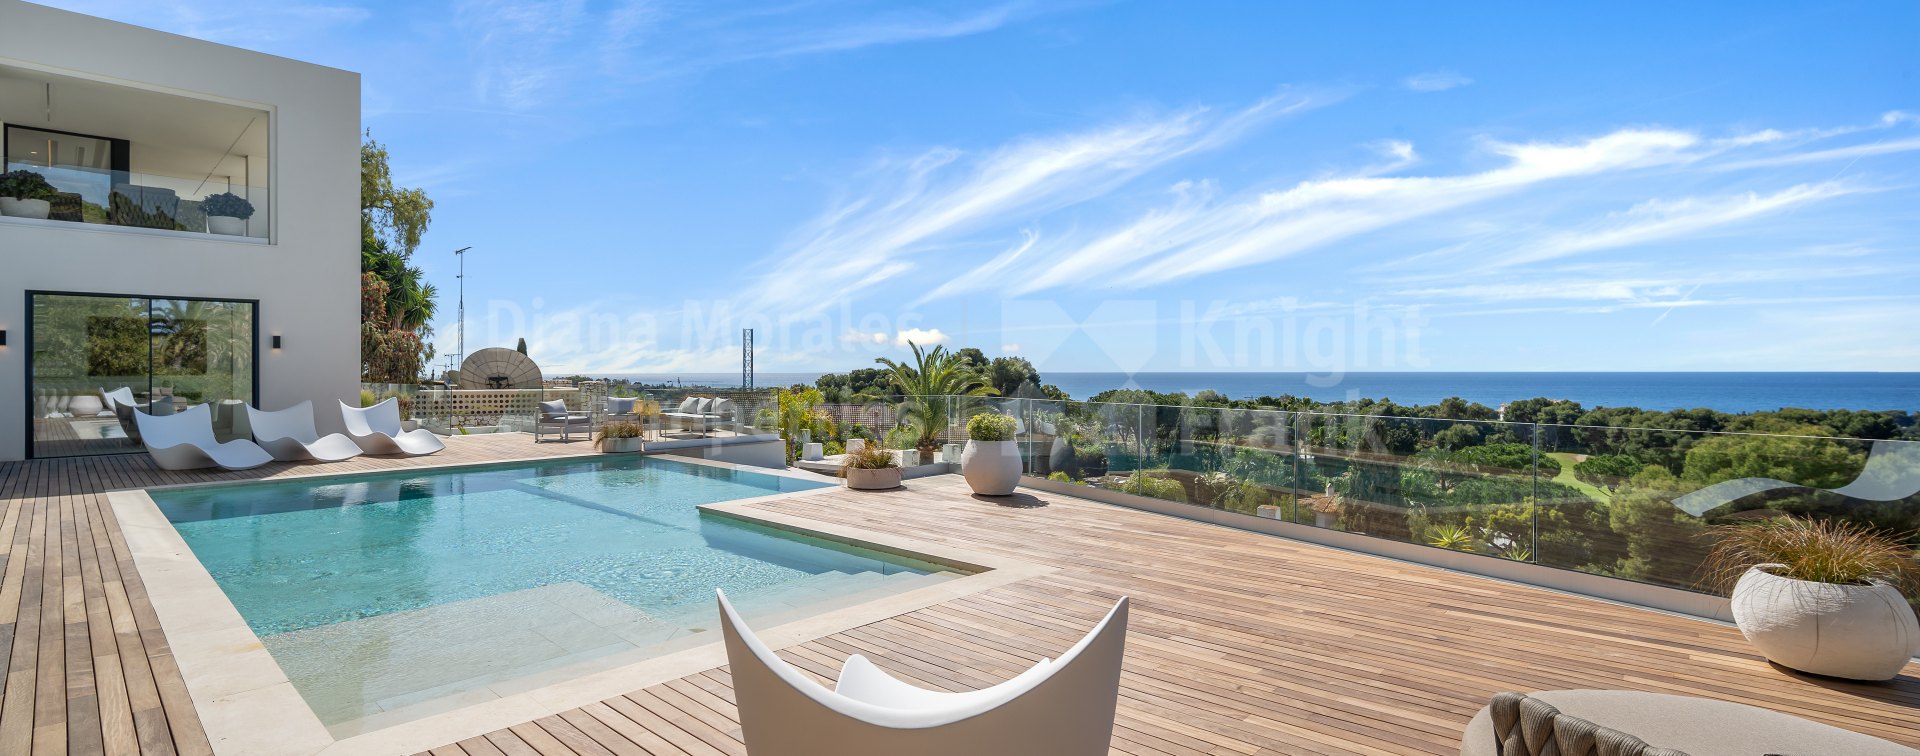 Rio Real, Villa with infinity pool and panoramic views